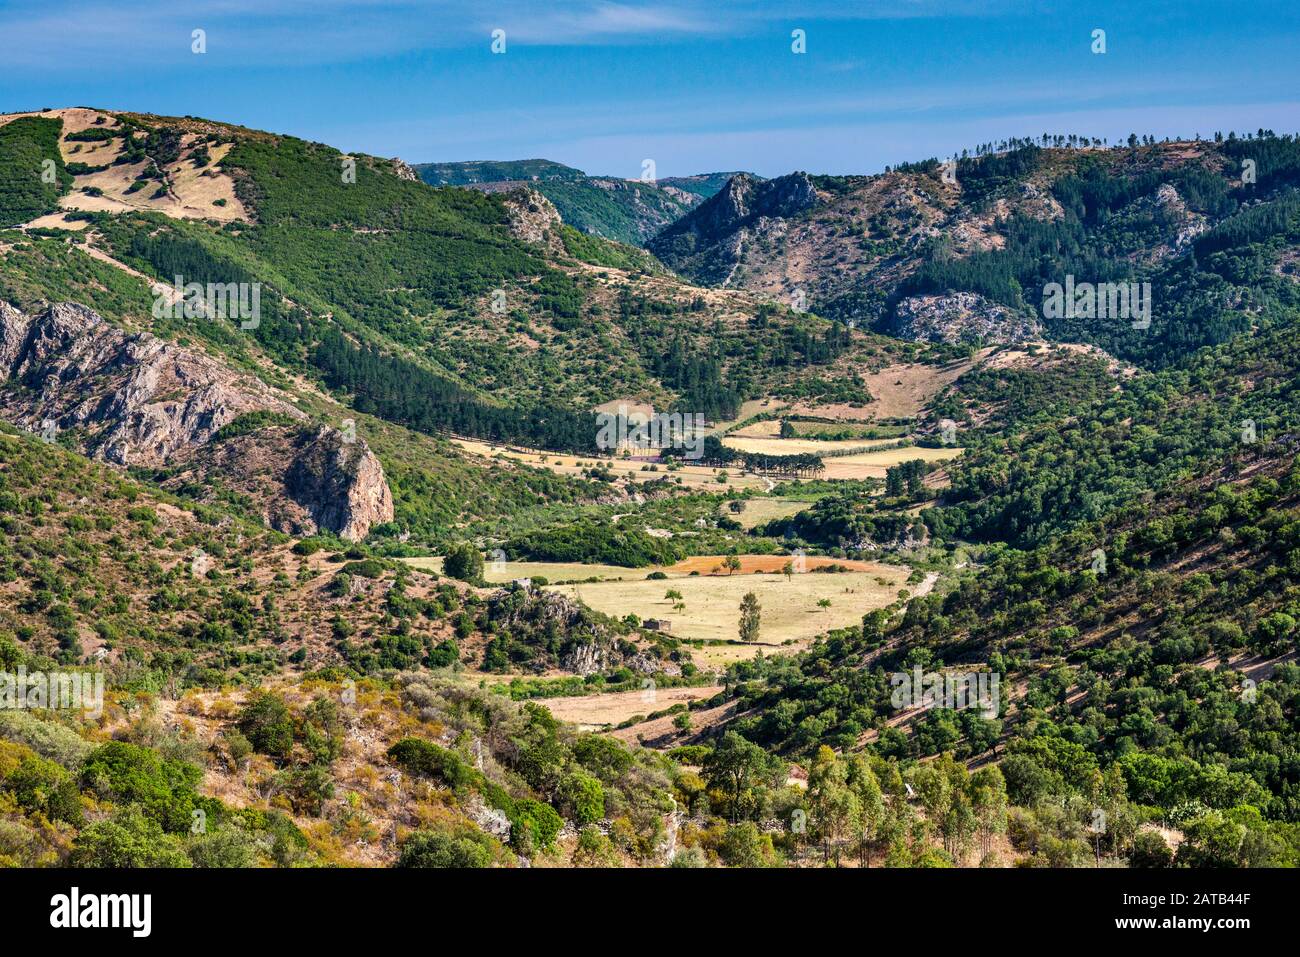 Rio Flumineddu valley, view from Arcu Is Fronestas viewpoint on Road 13, near village of Escalaplano, Sud Sardegna province, Sardinia, Italy Stock Photo